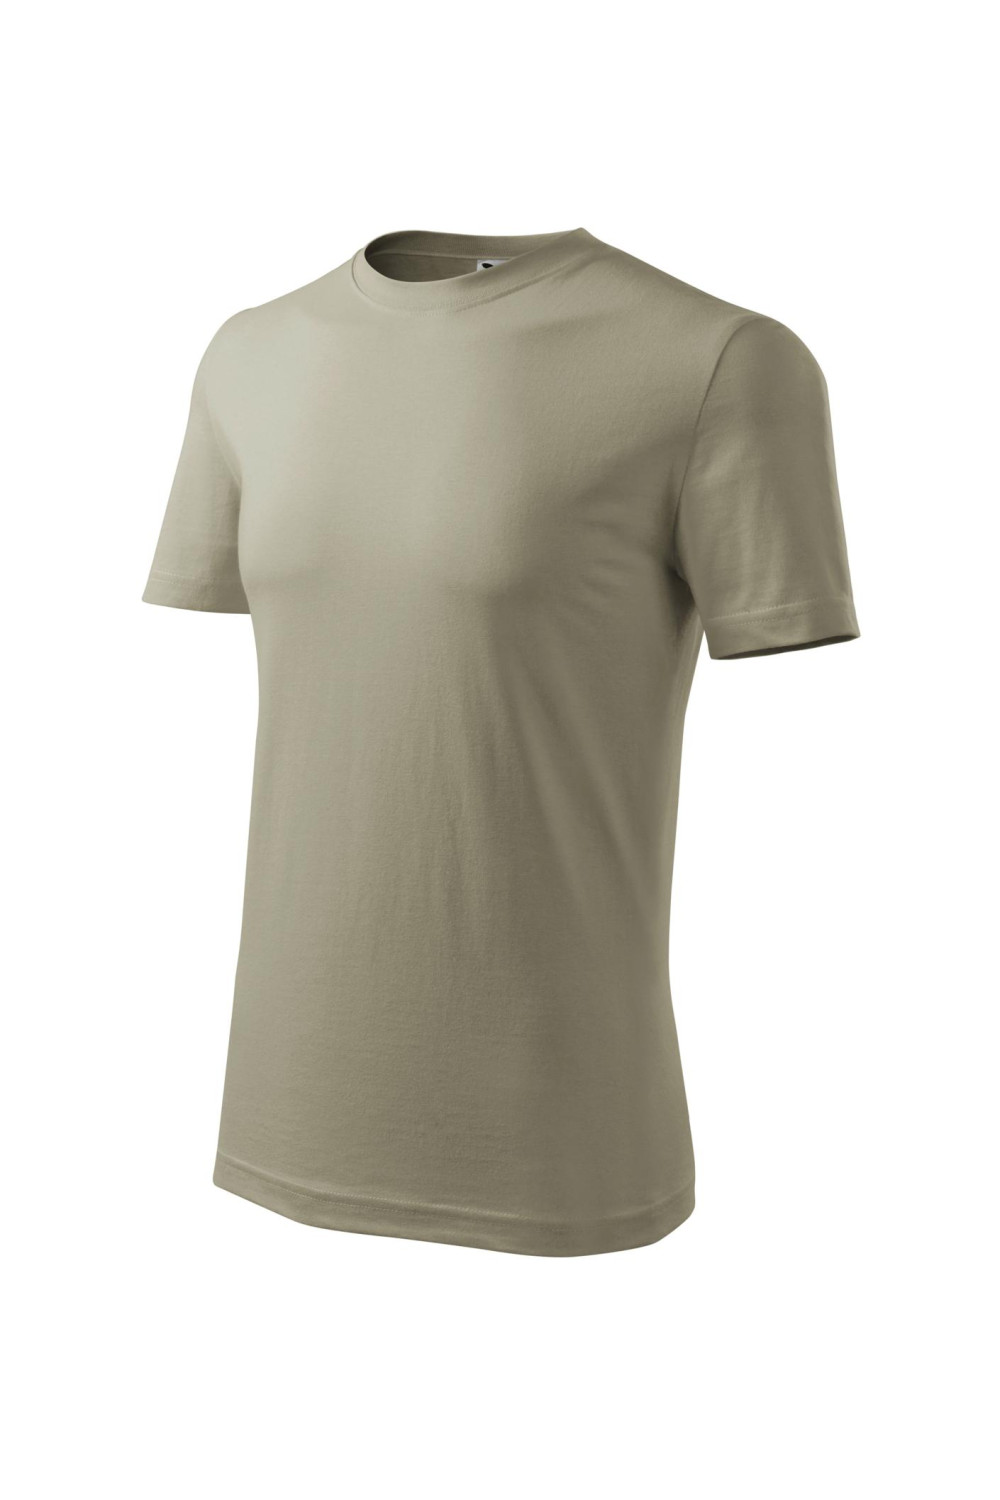 Koszulka męska 100% bawełna CLASSIC 132 jasny khaki